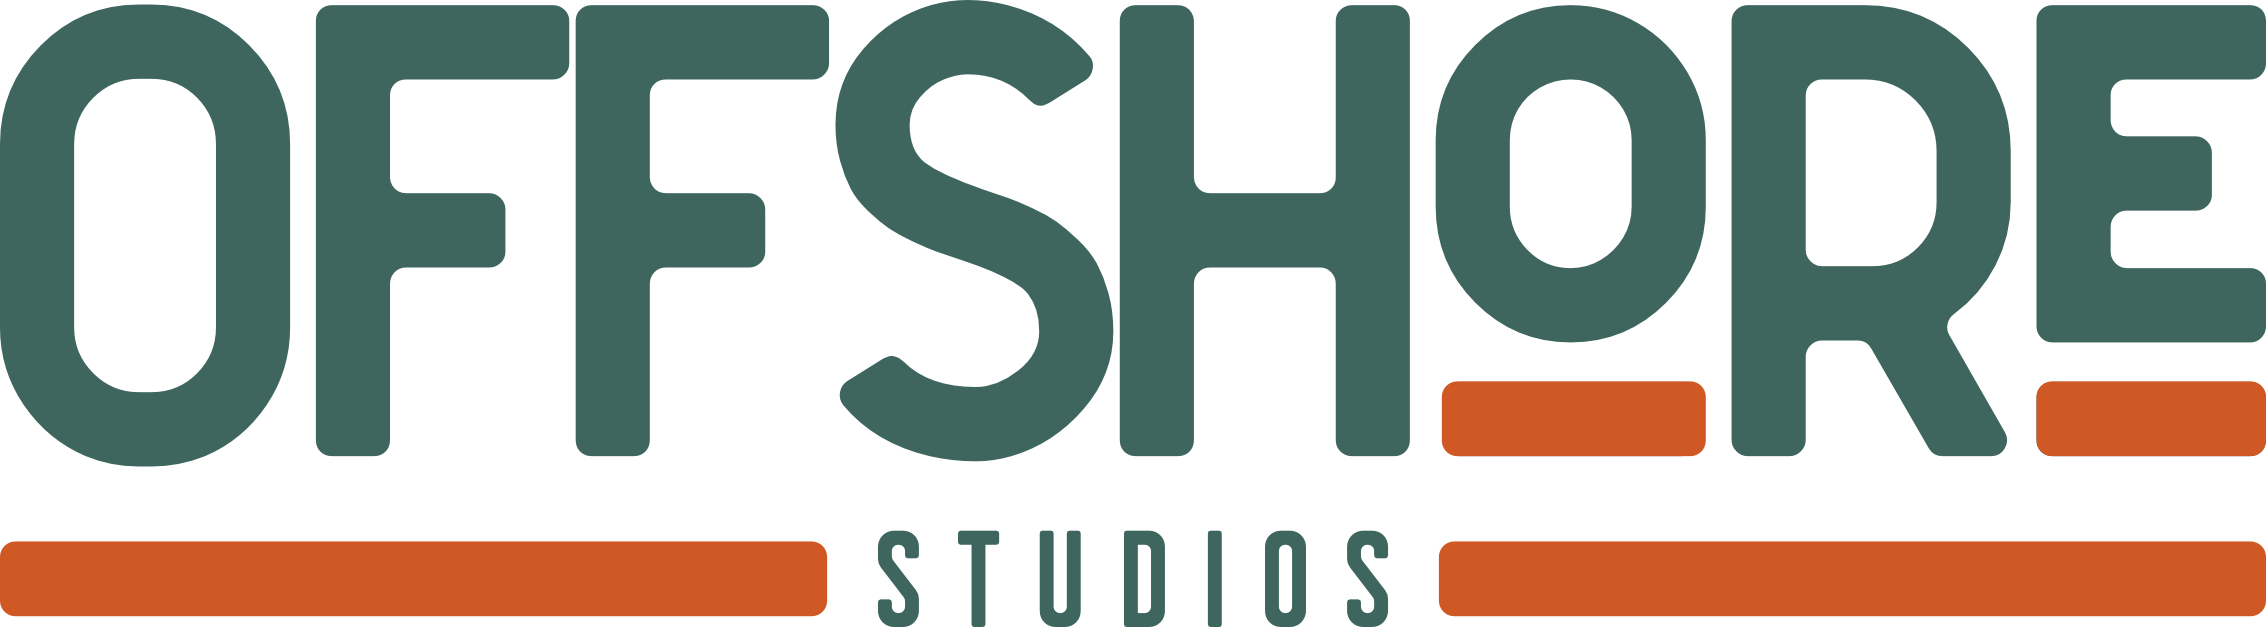 Offshore Studios Cleethorpes